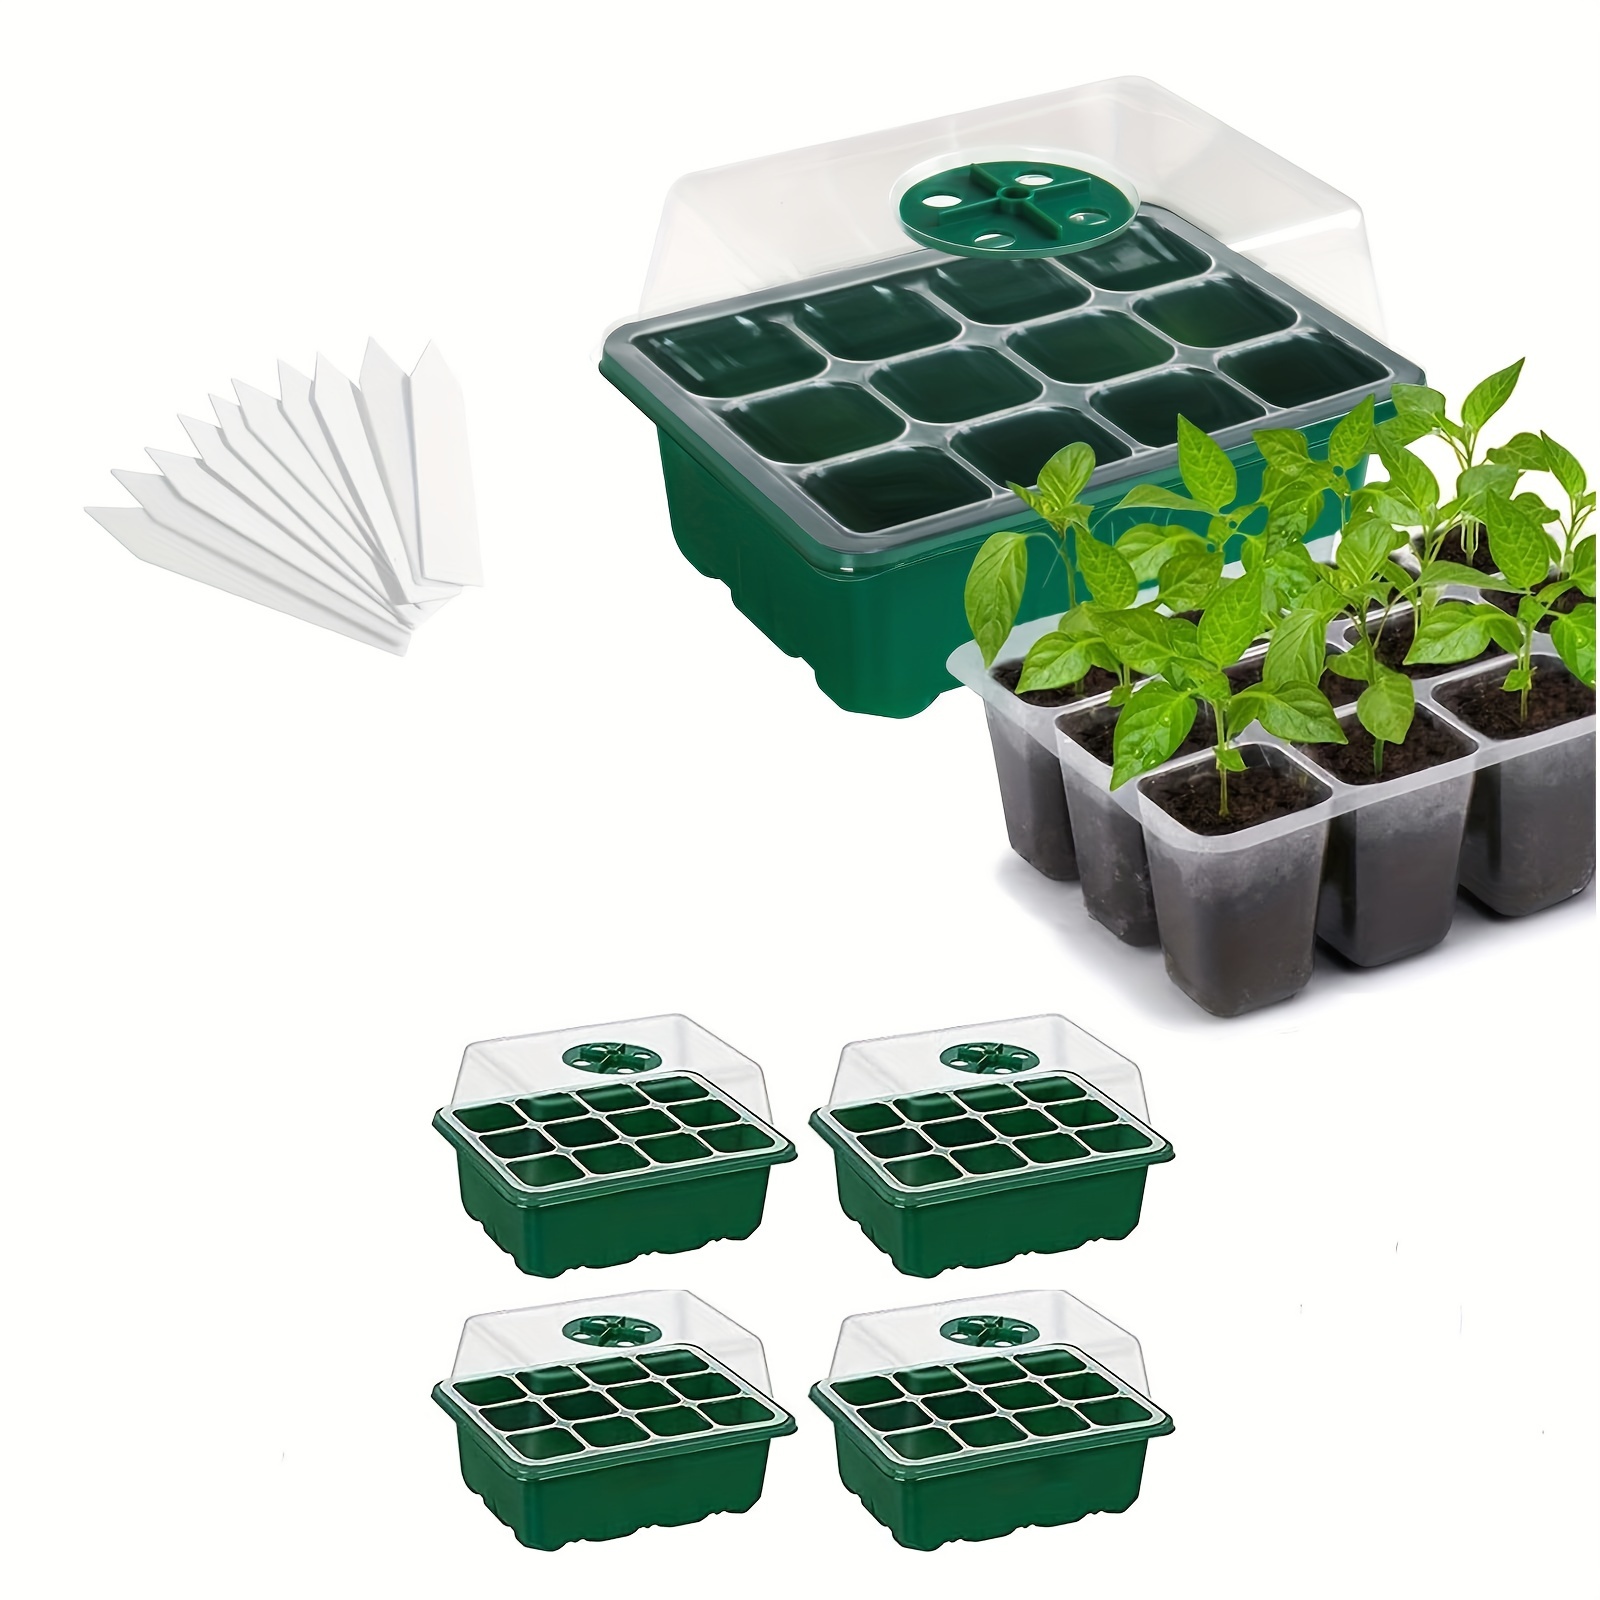 Hanaoyo Reusable Seed Starter Tray, 1 PCS Seed Starter Kit with